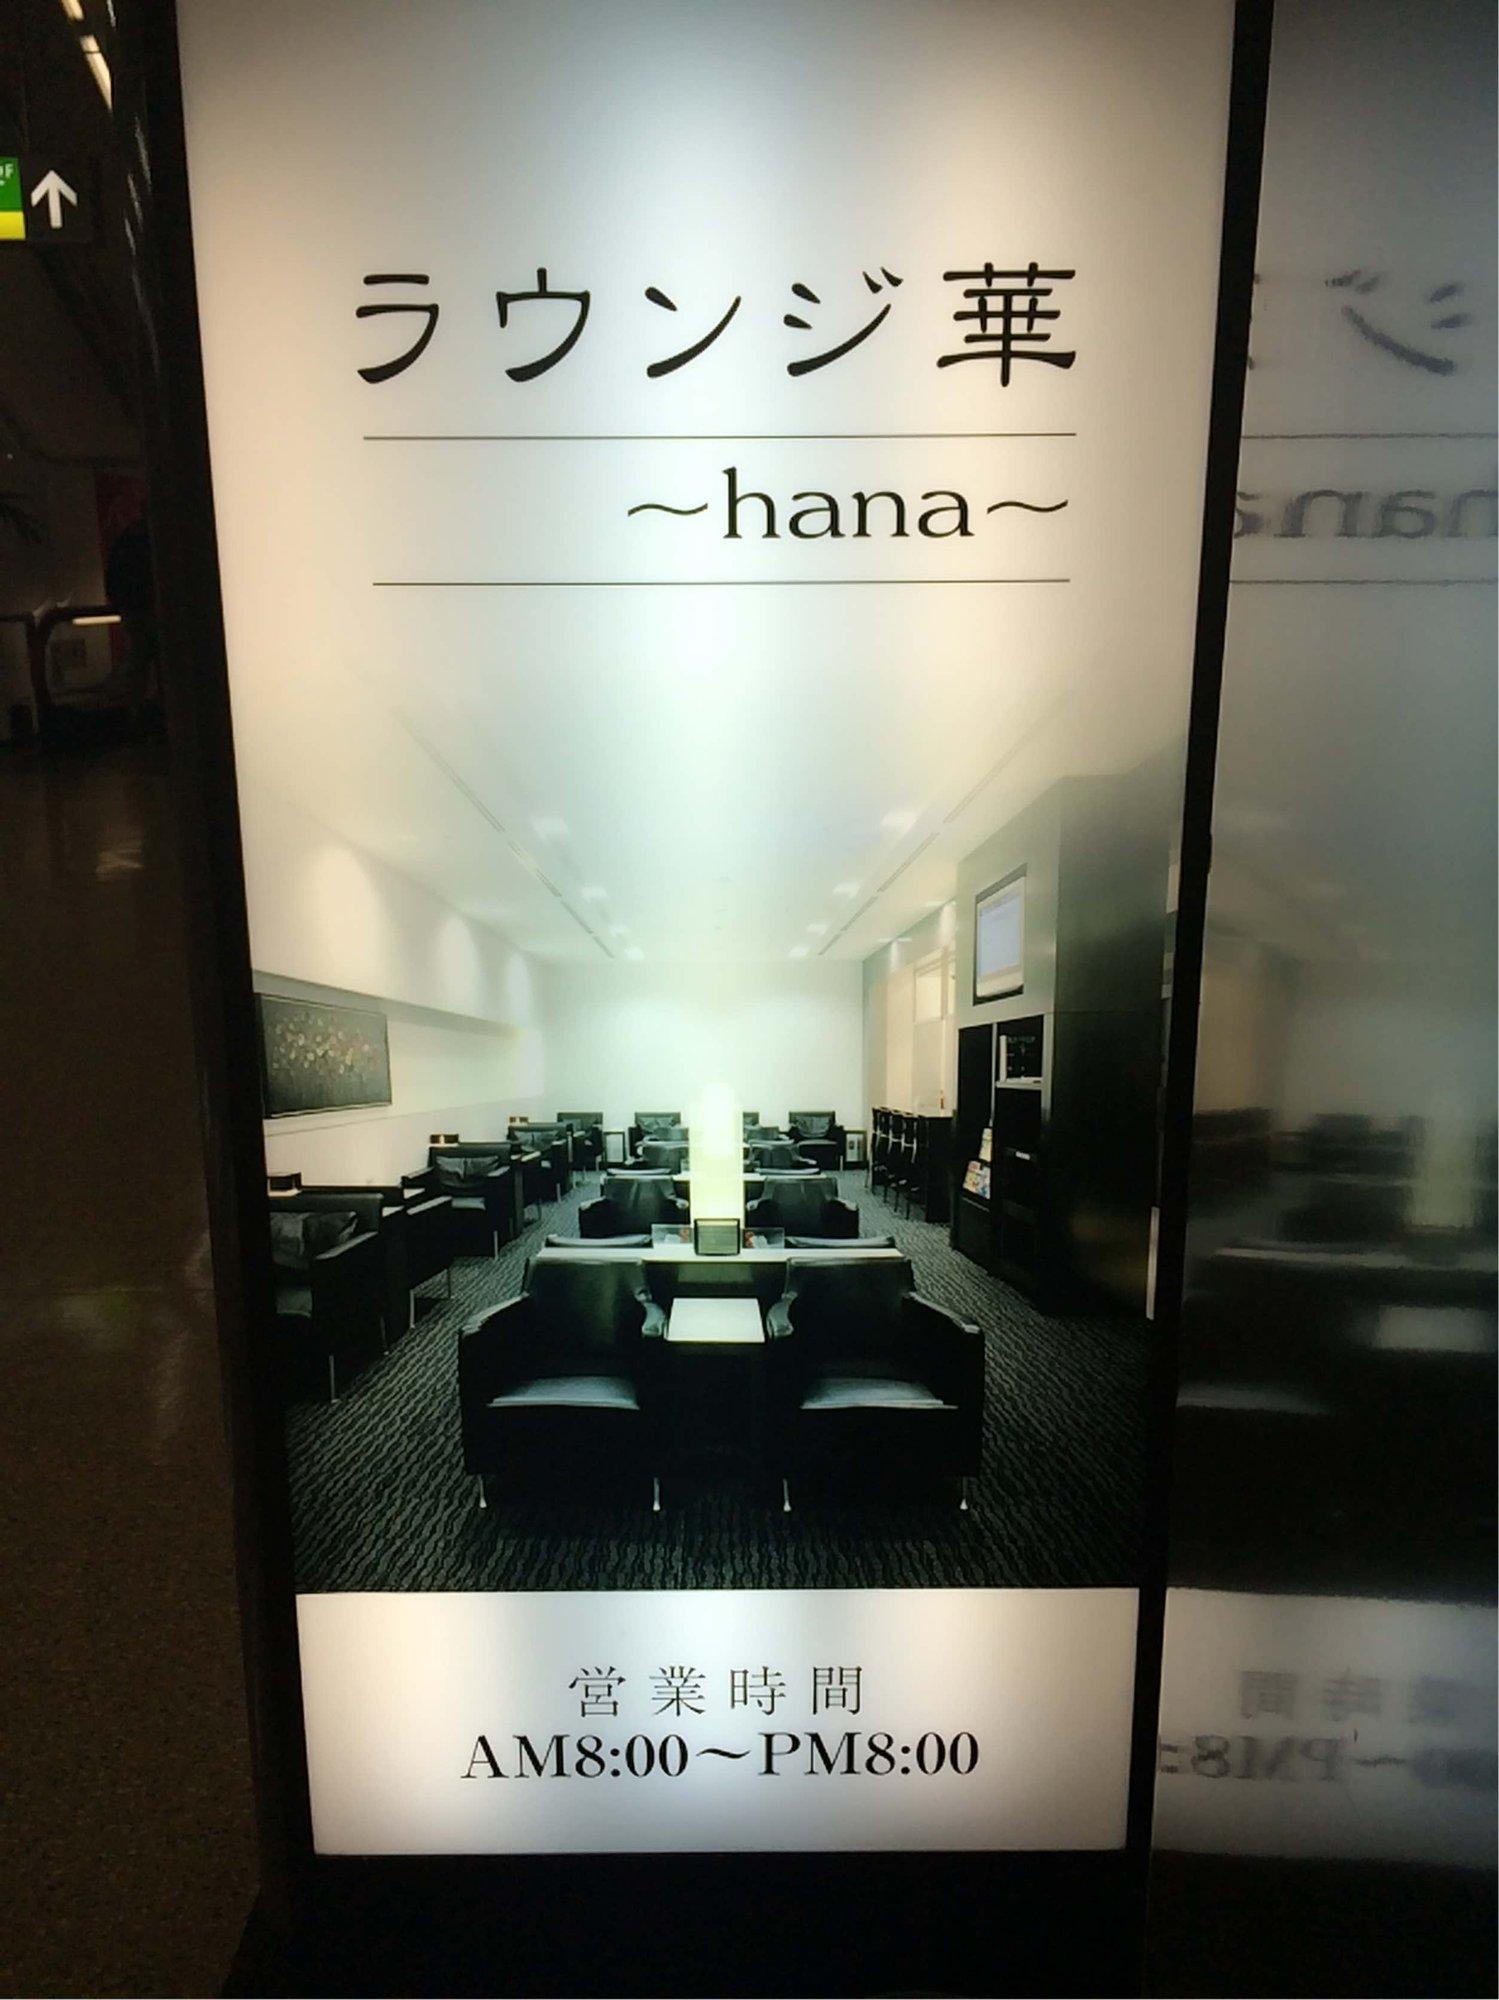 Lounge Hana image 4 of 5